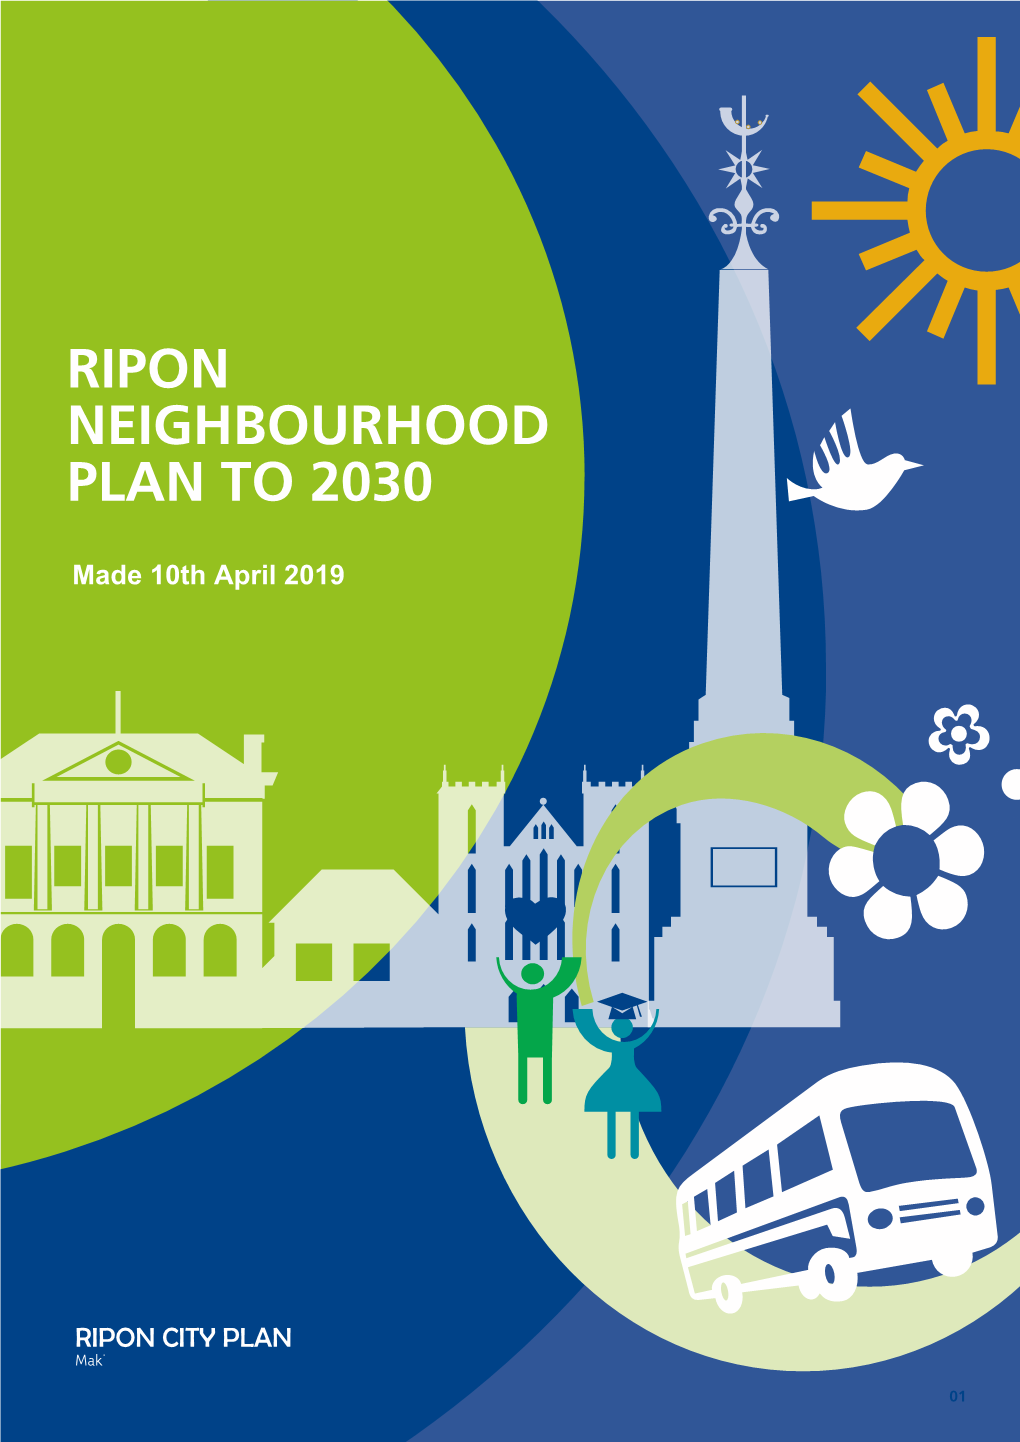 Ripon Neighbourhood Plan to 2030